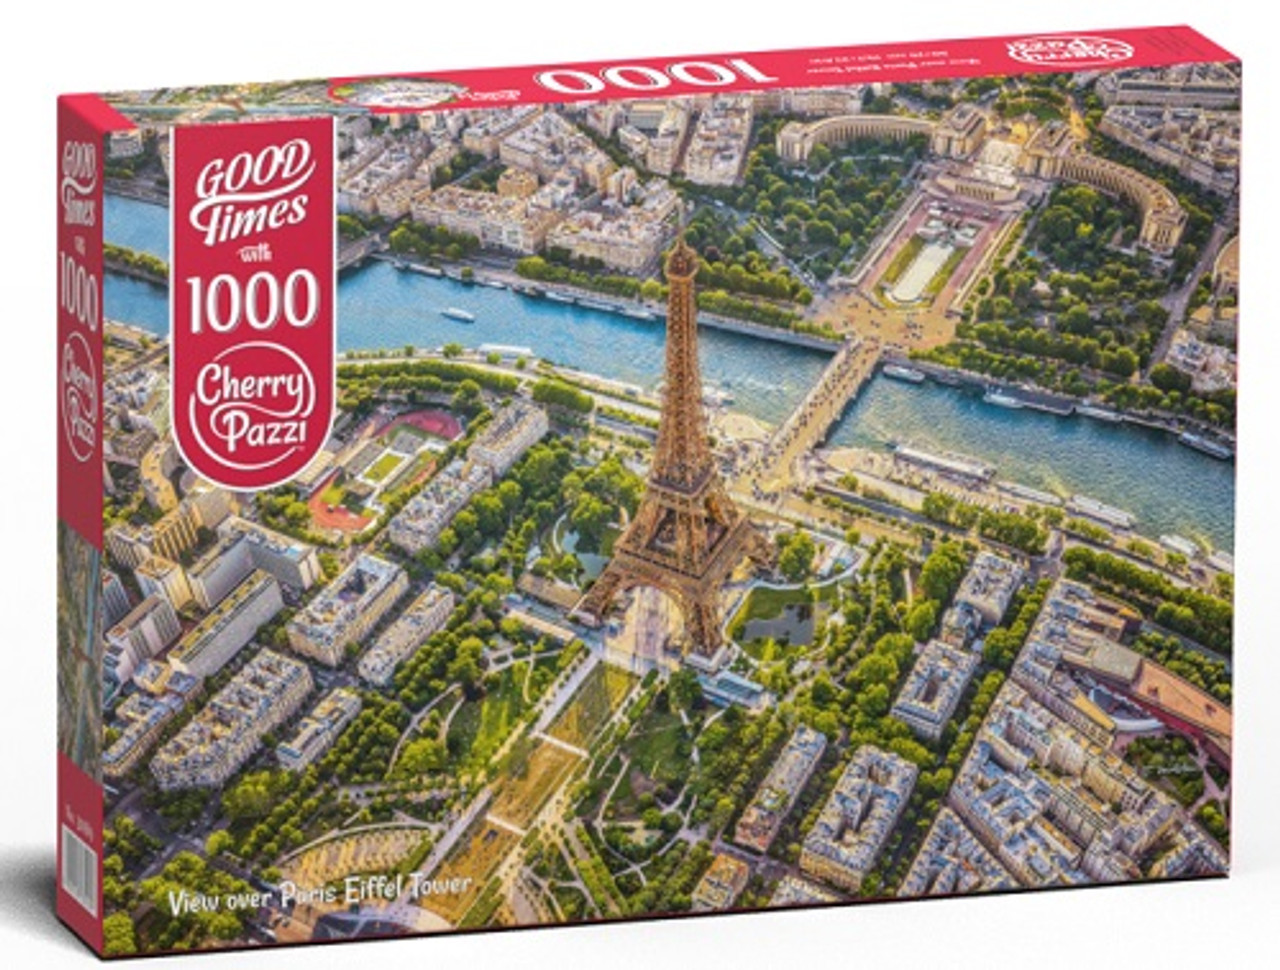 Trefl Puzzle 1000 Pieces, Brand New Unopened, Premium Quality Jigsaw, City